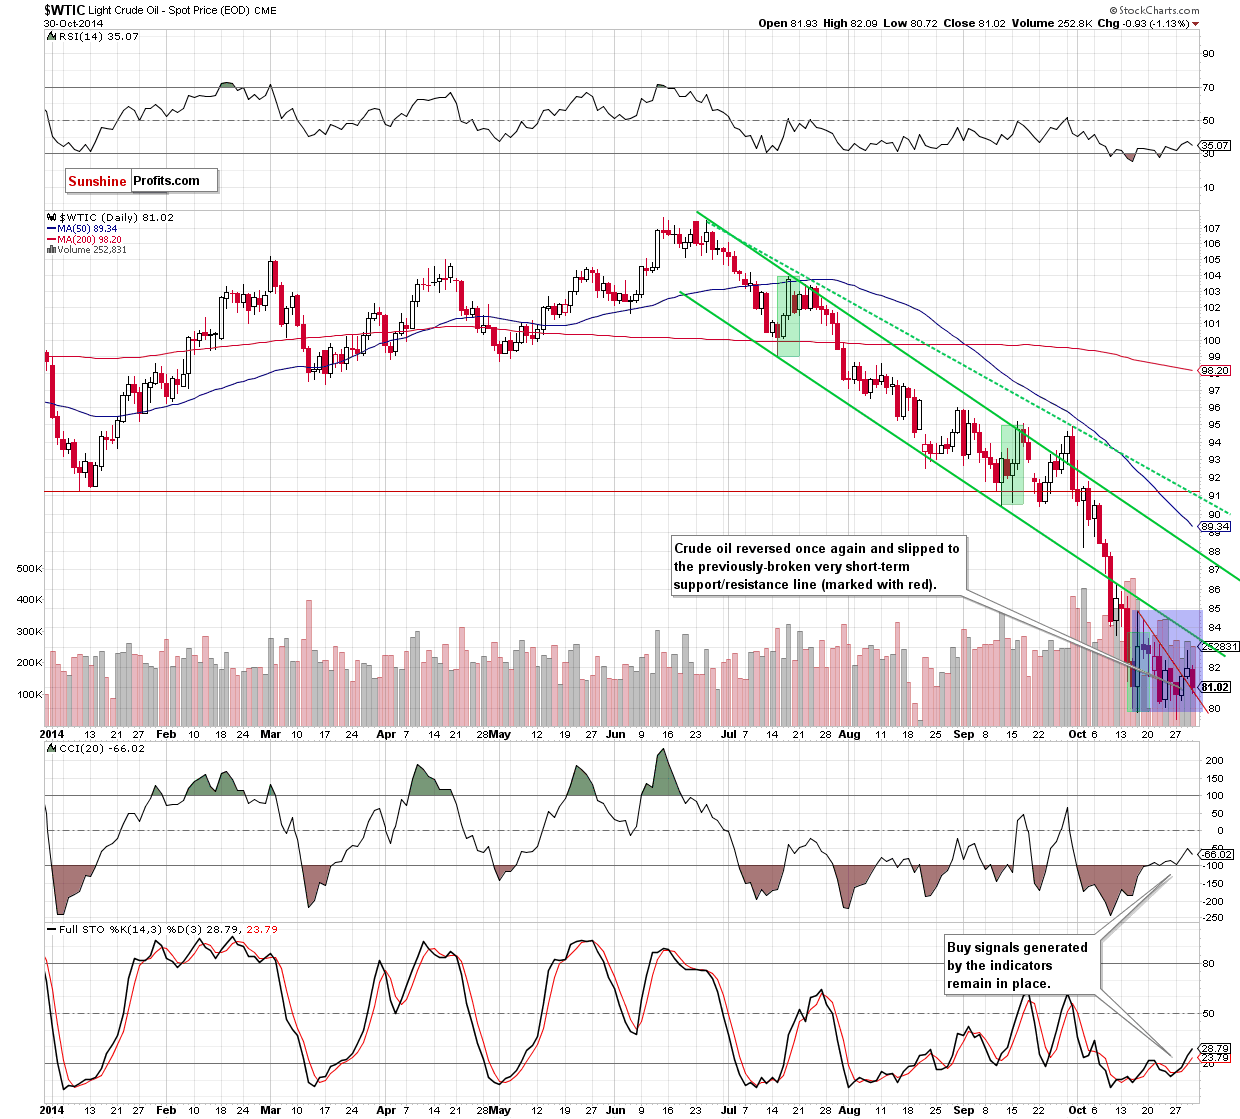 WTI Crude Oil price chart